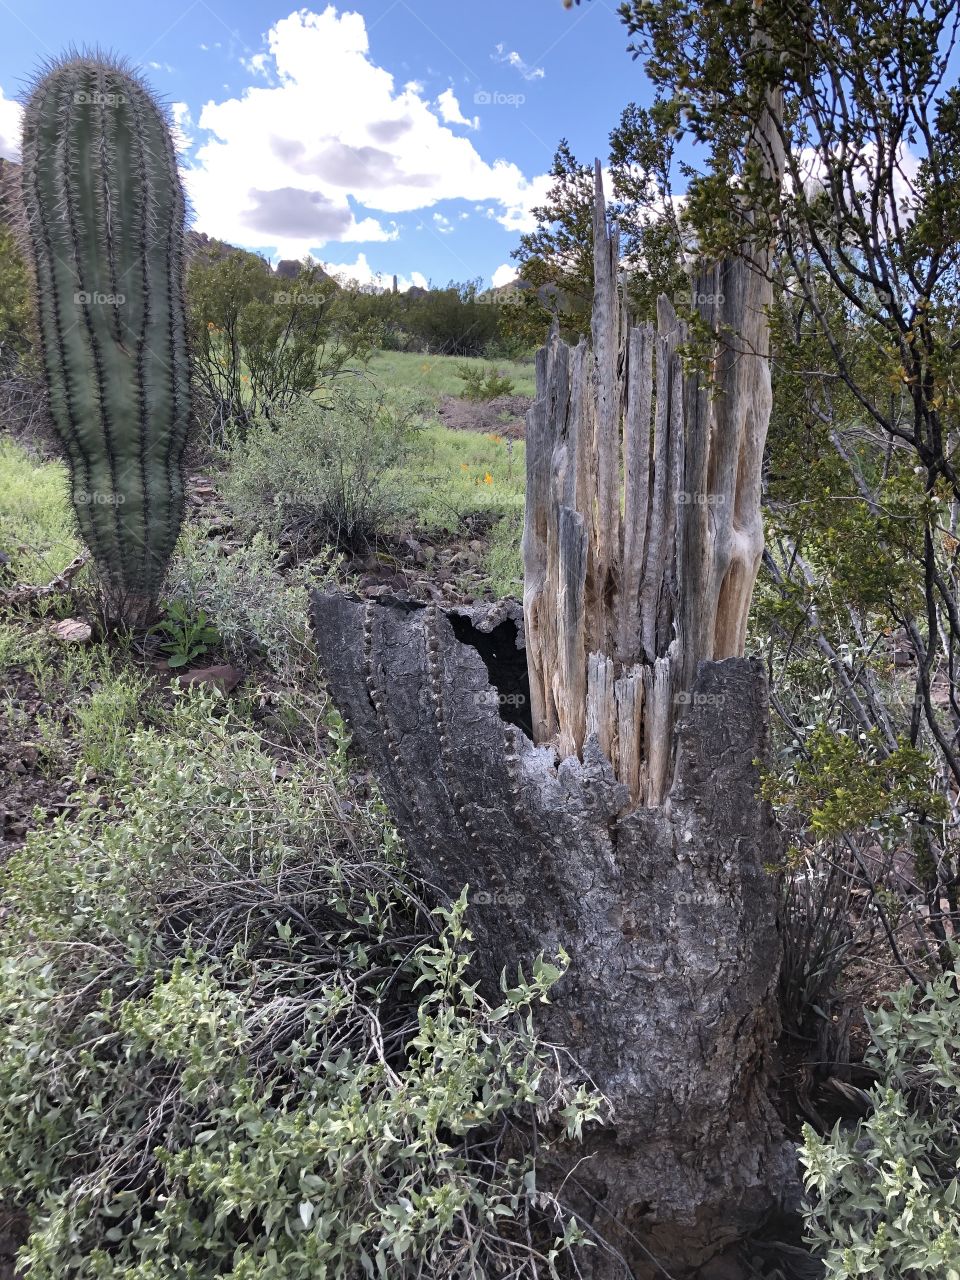 Saguaro Living and Dead